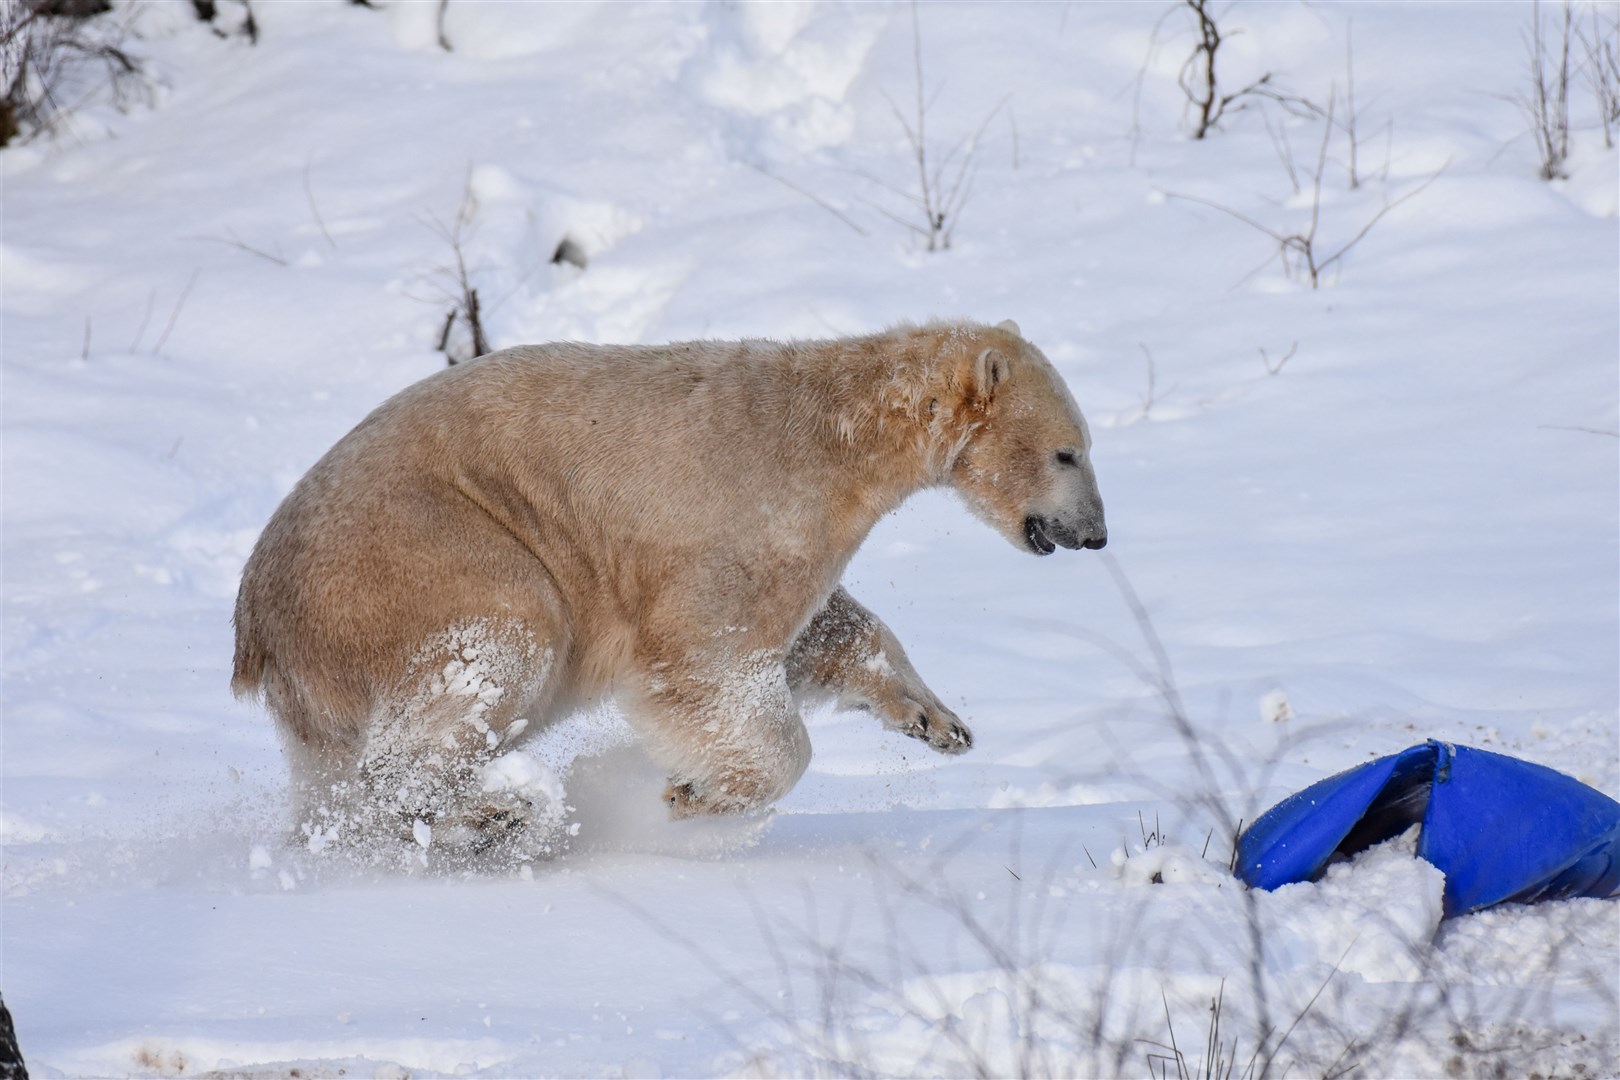 Hamish has fun in the snow.